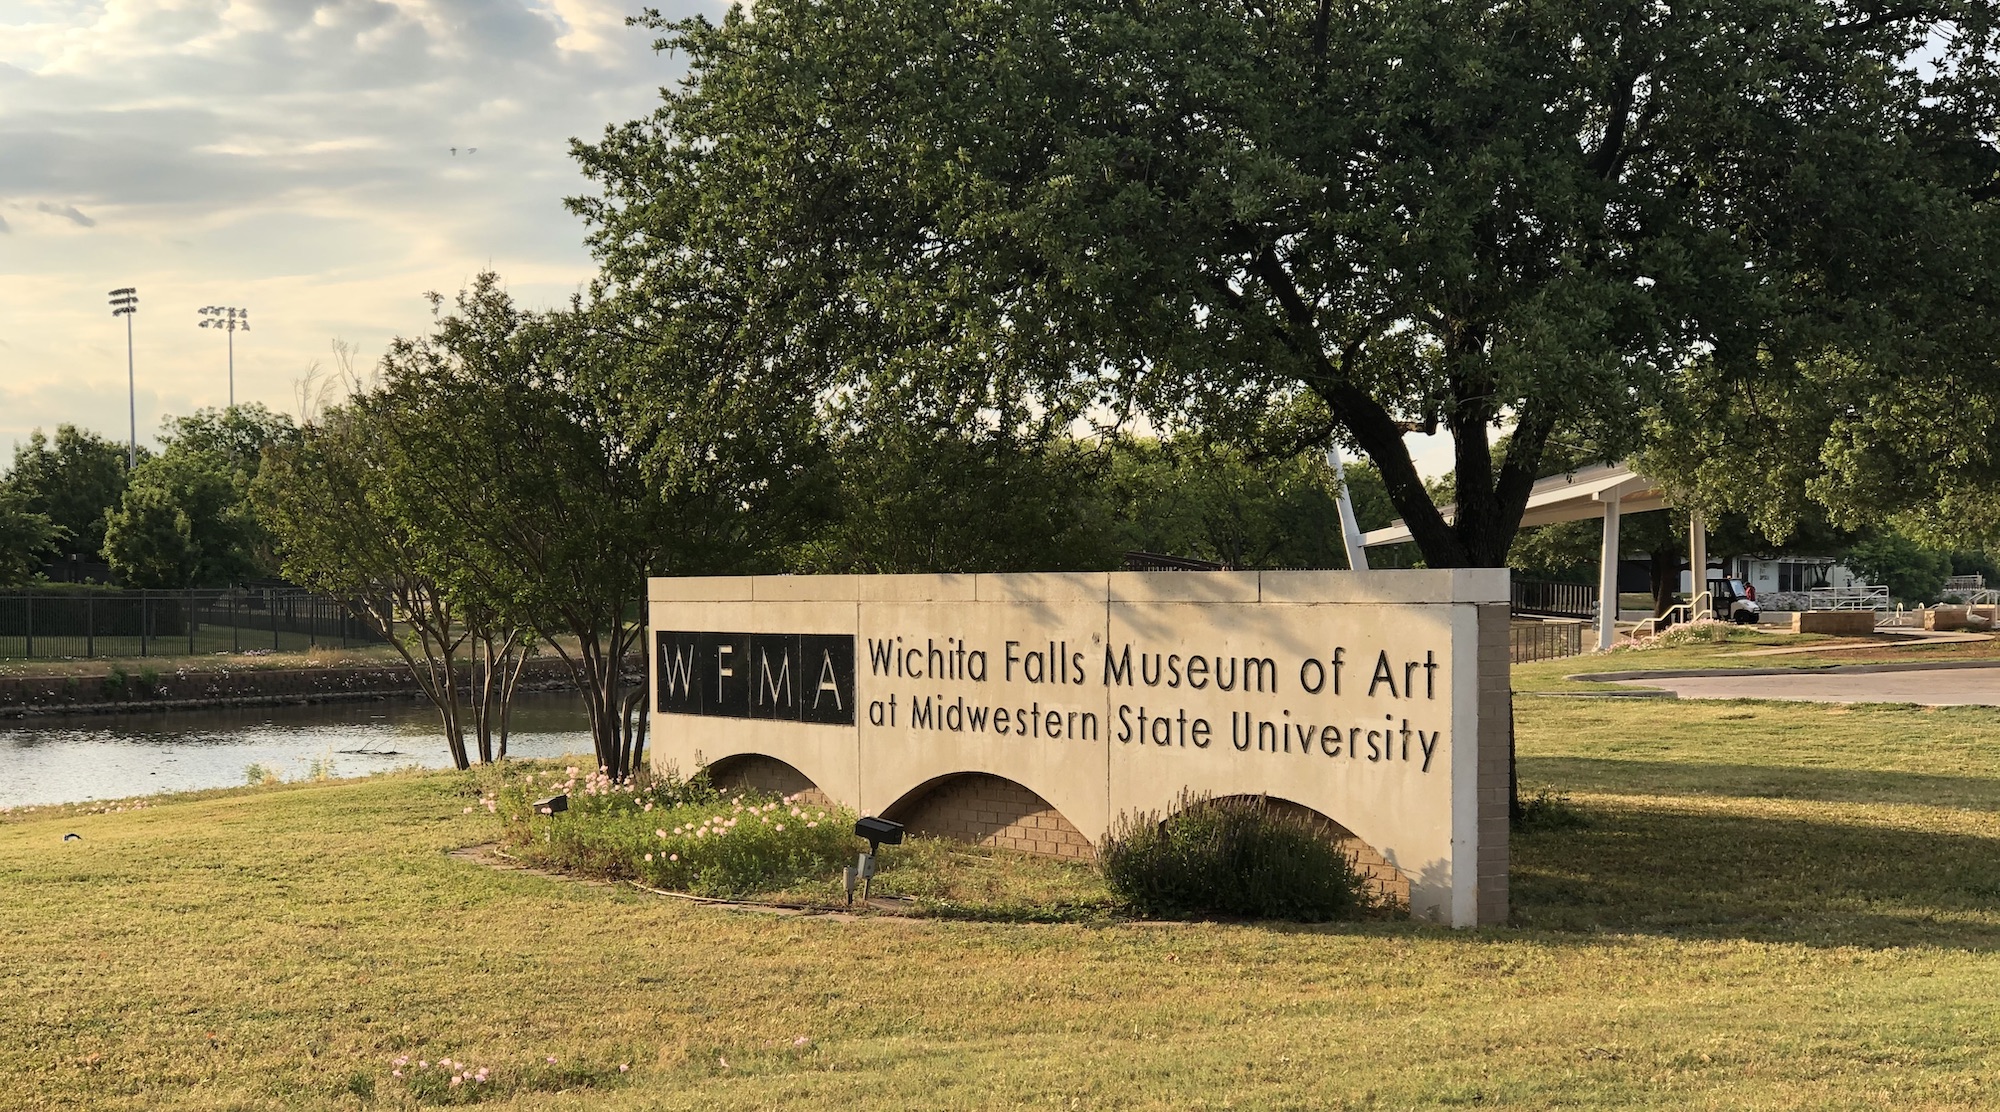 Outside the Wichita Falls Museum of Art at Midwestern State University